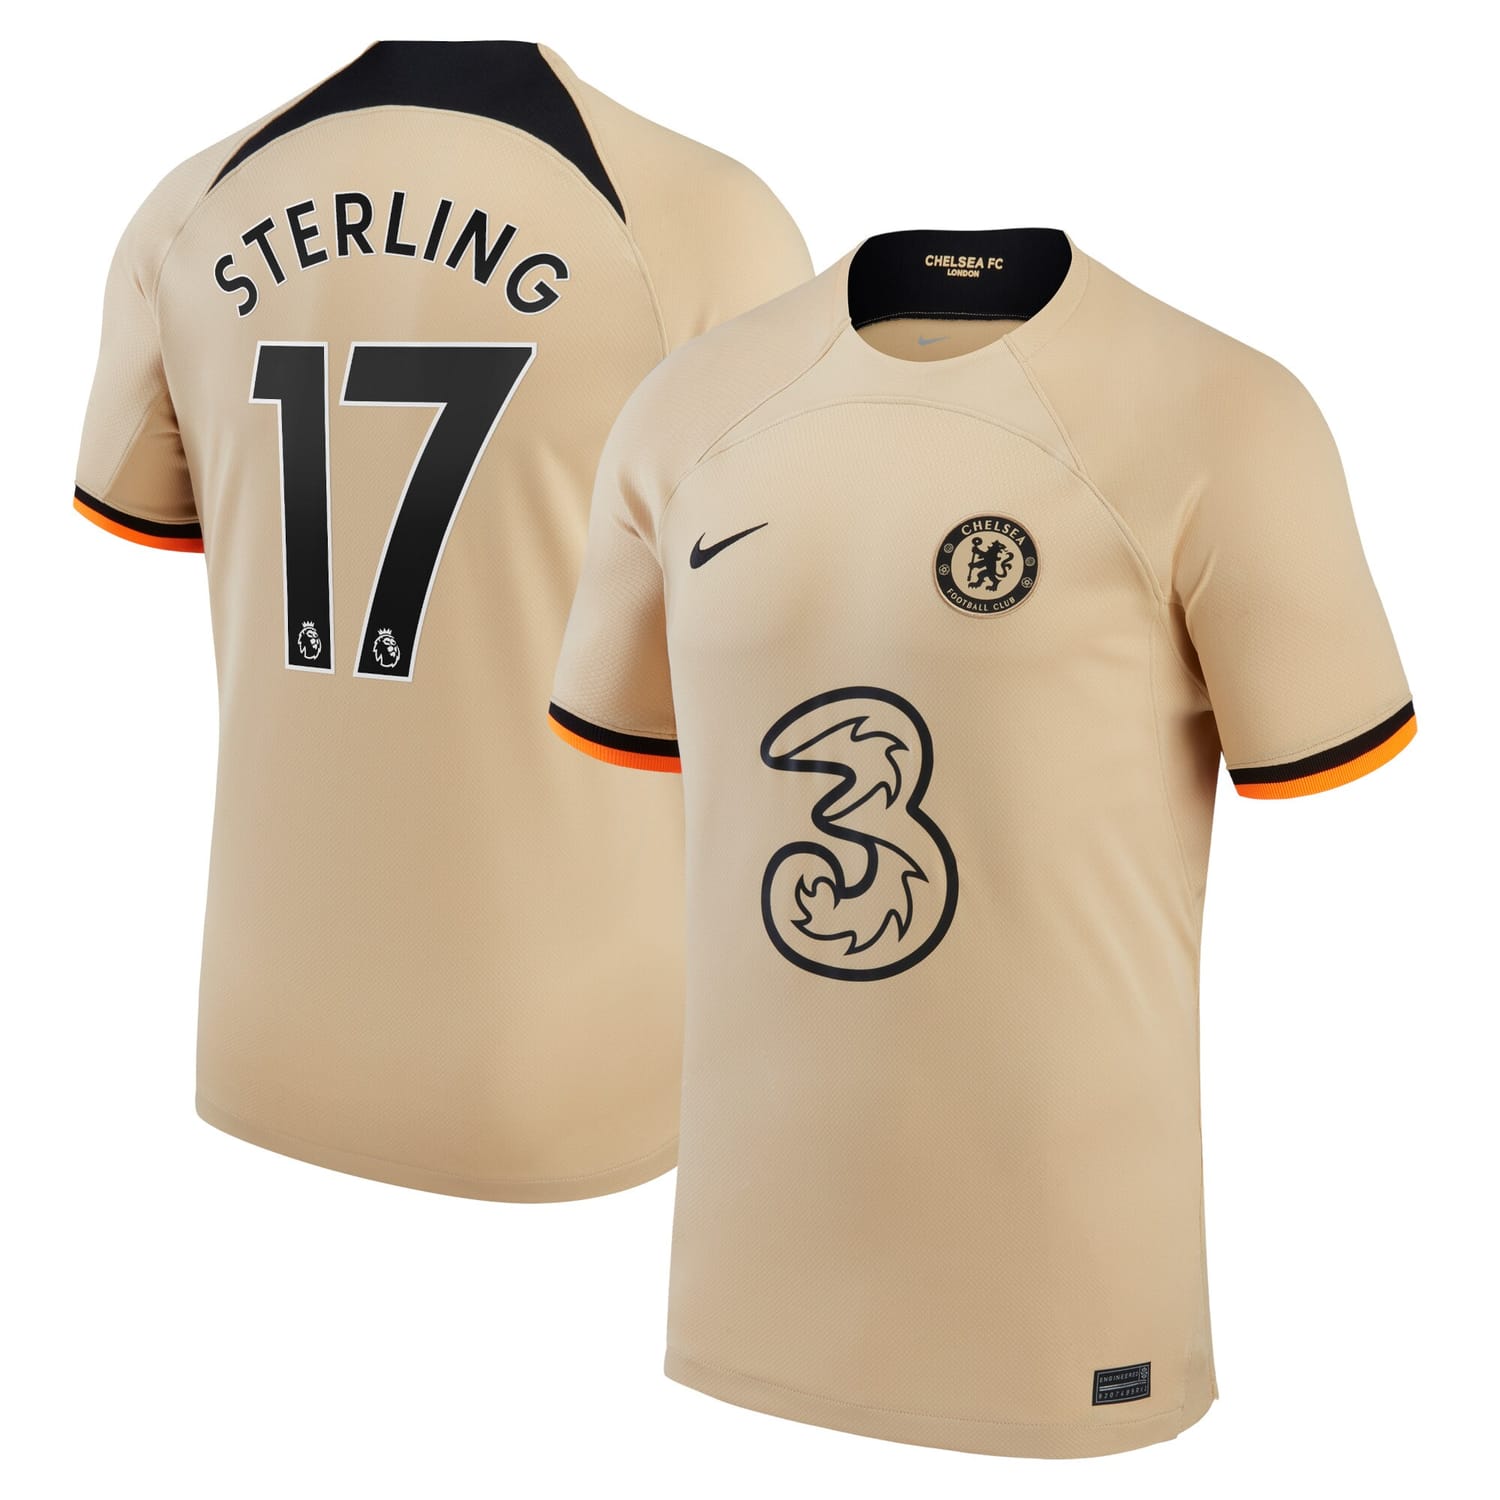 Premier League Chelsea Third Jersey Shirt Gold 2022-23 player Raheem Sterling printing for Men